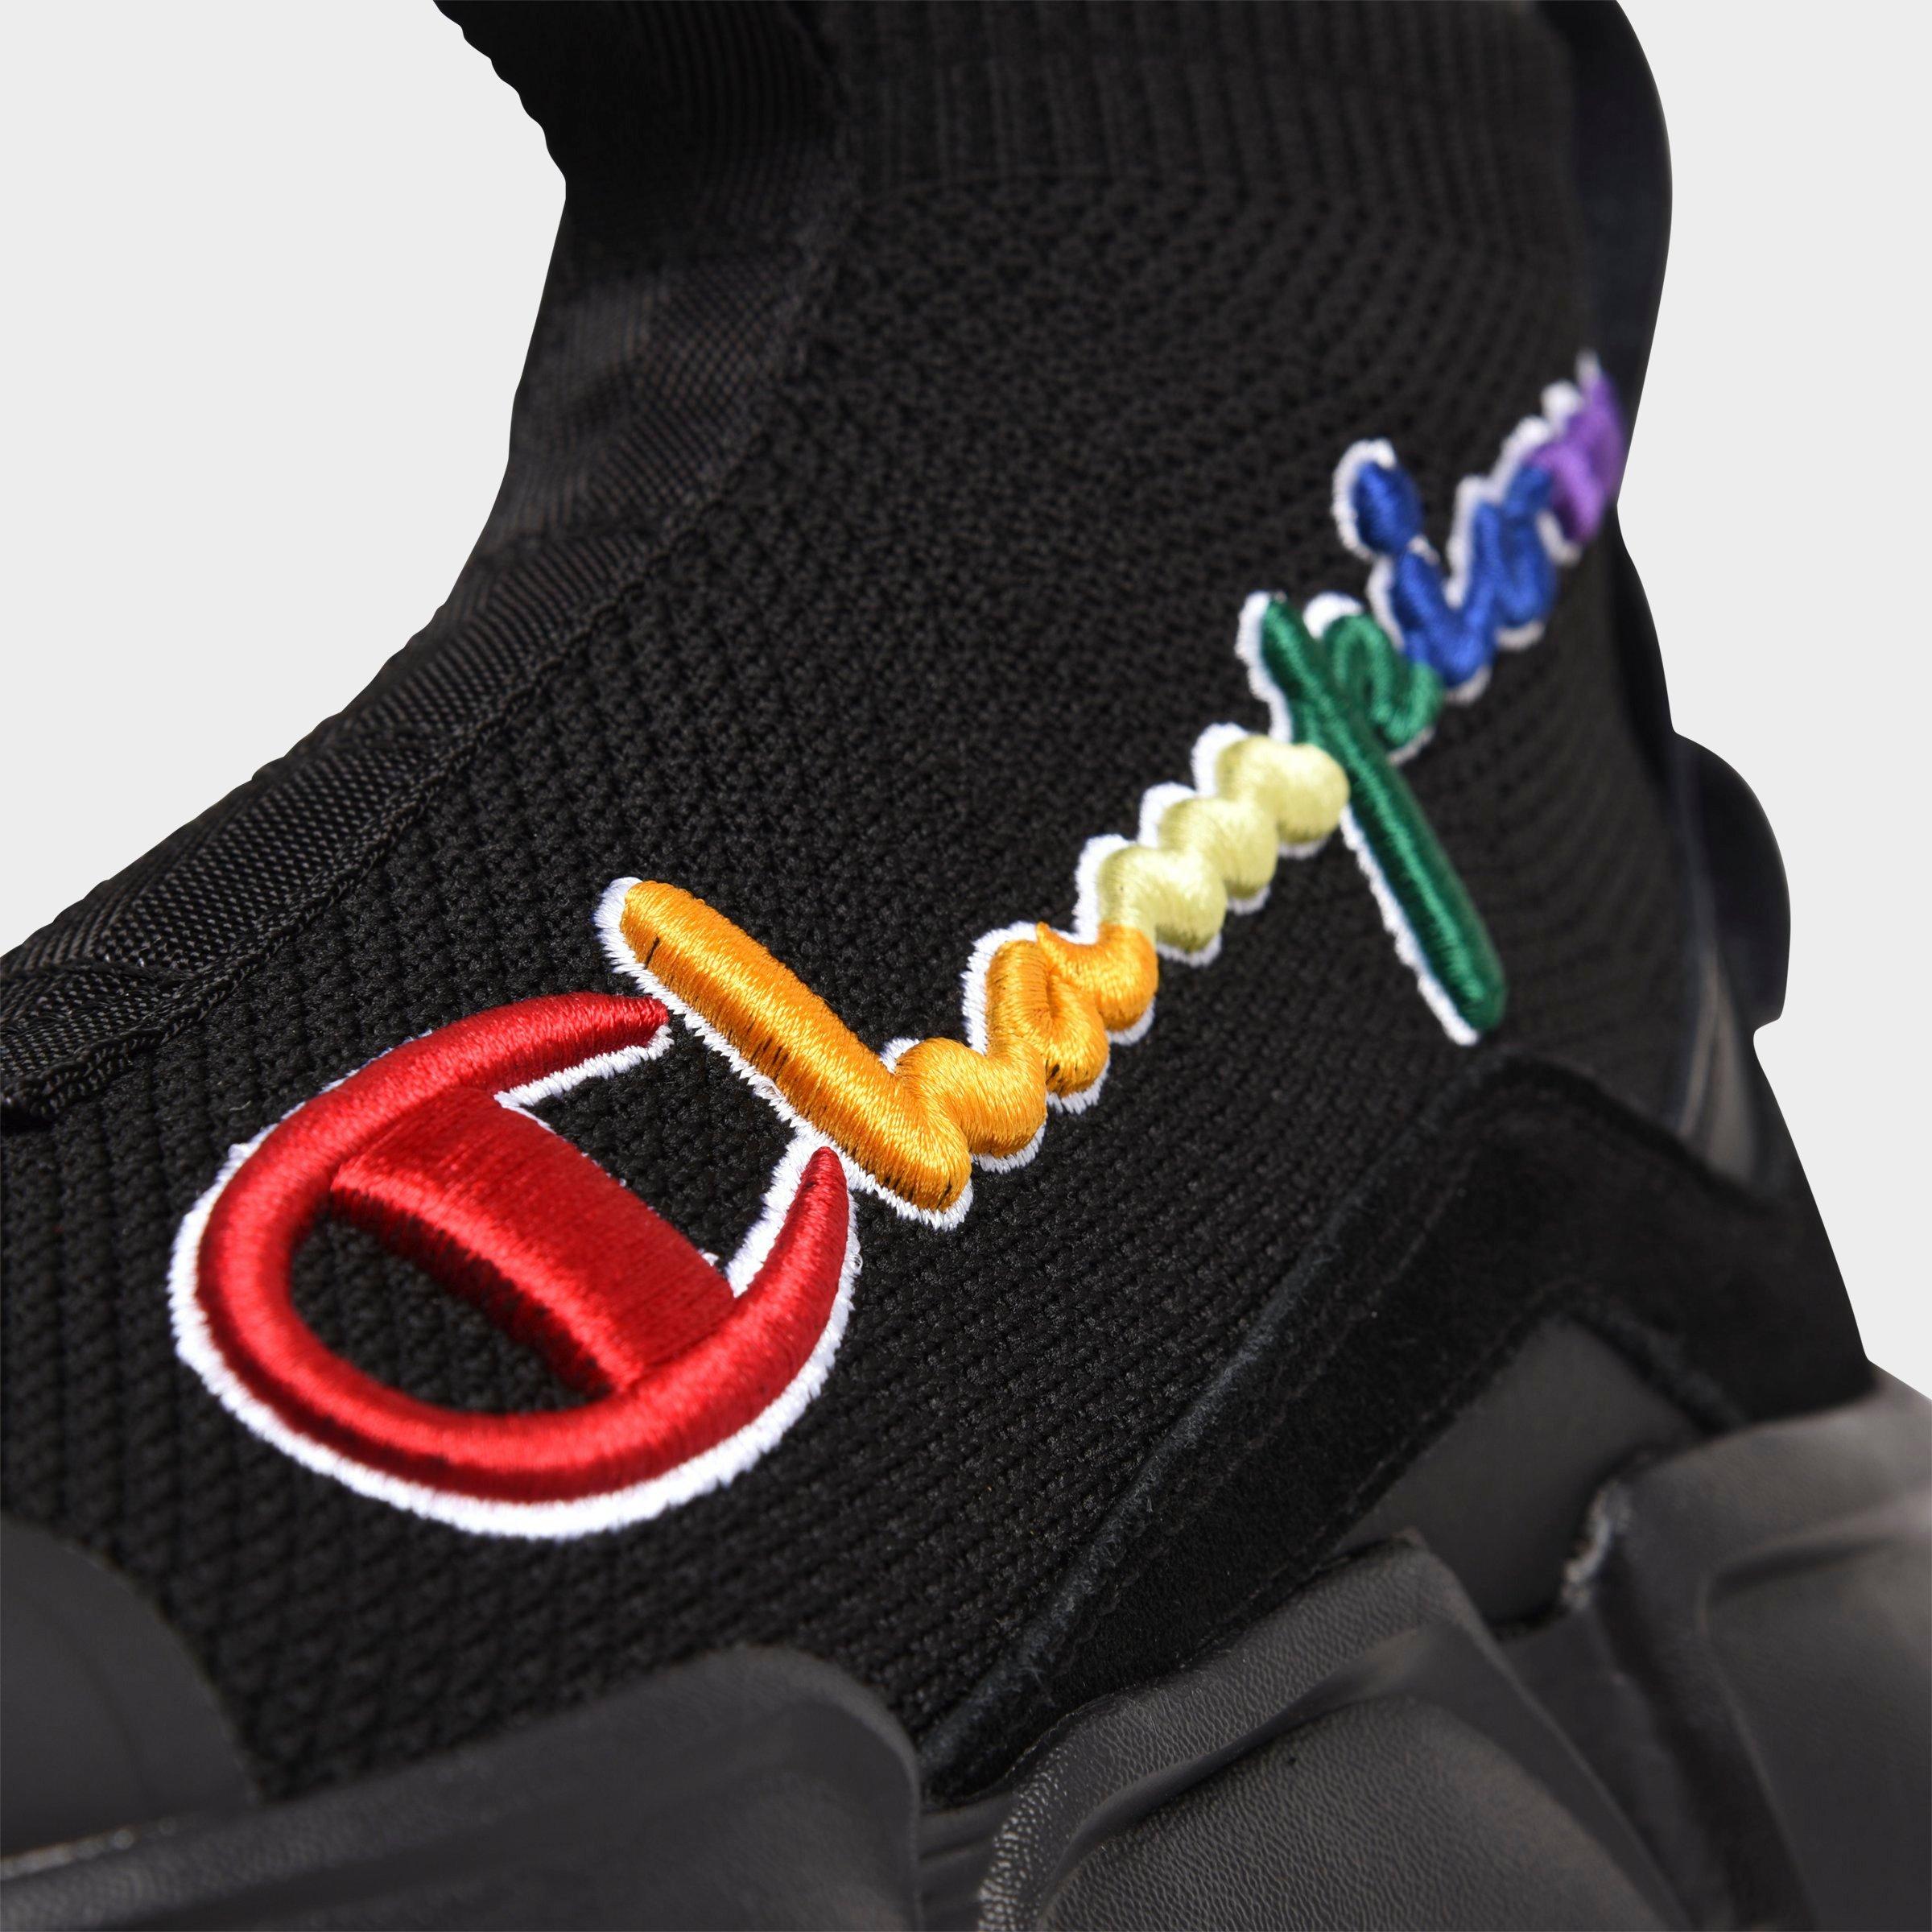 rainbow champion shoes